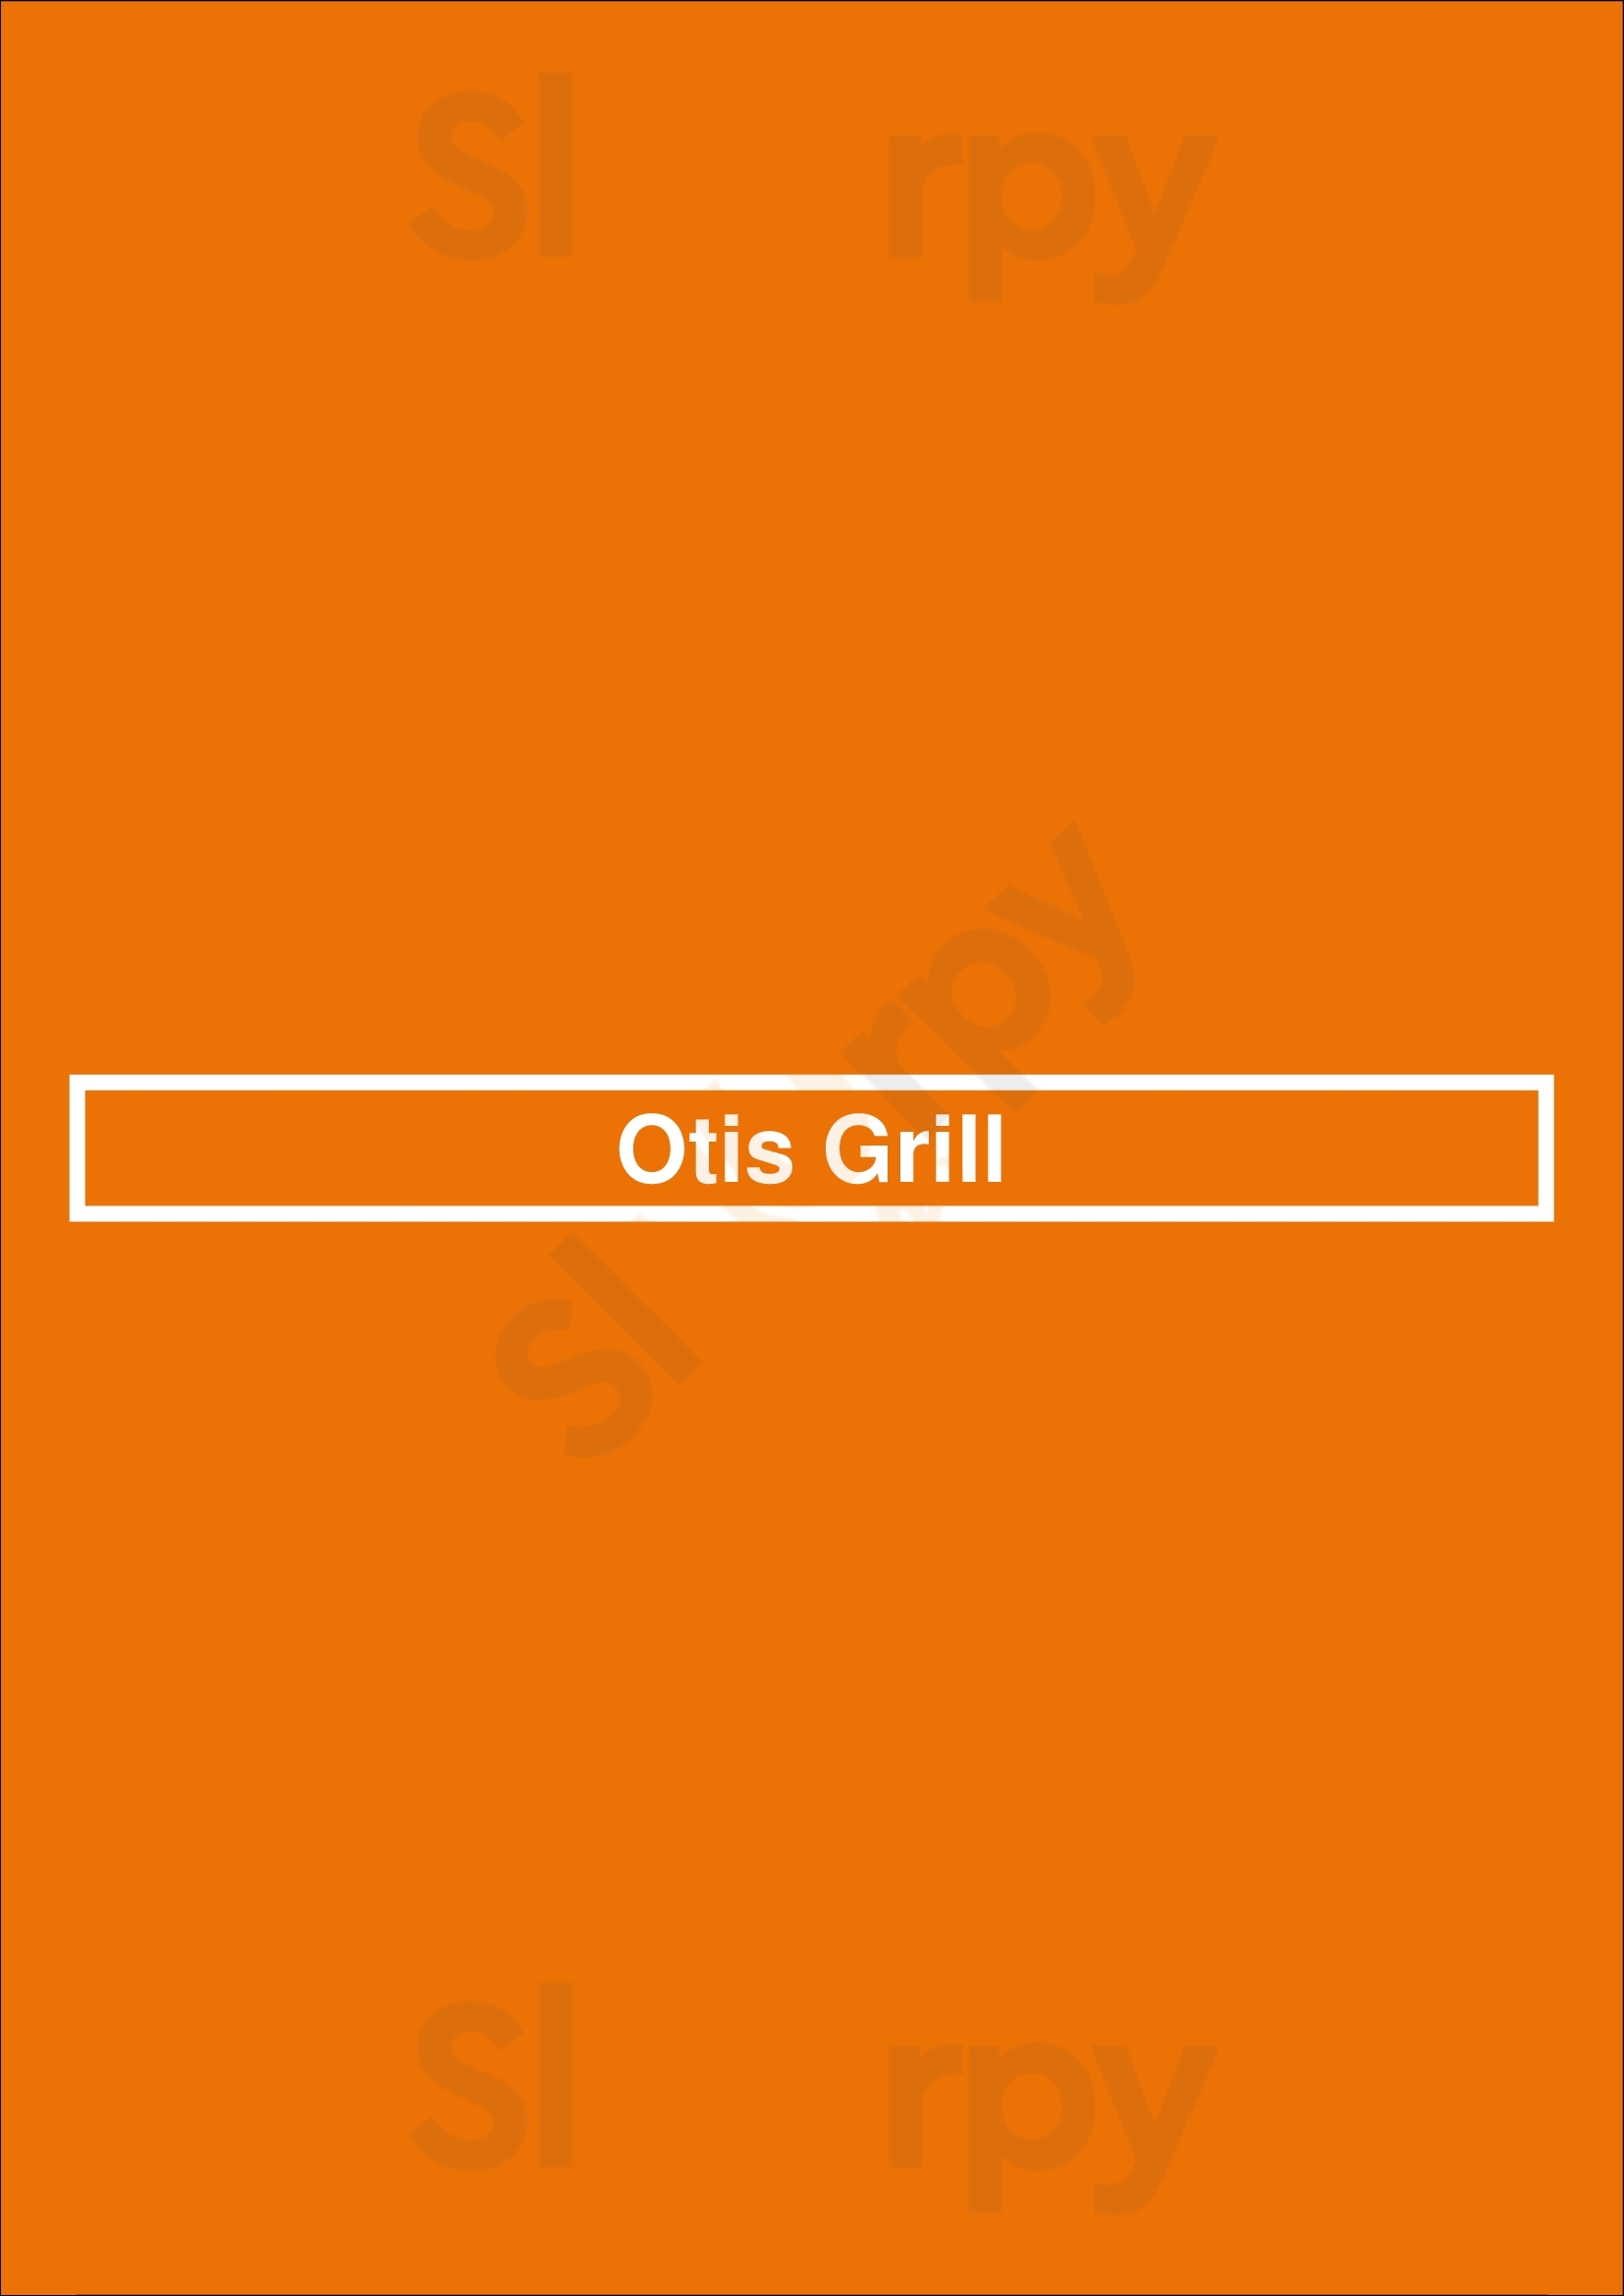 Otis Grill Campbelltown Menu - 1